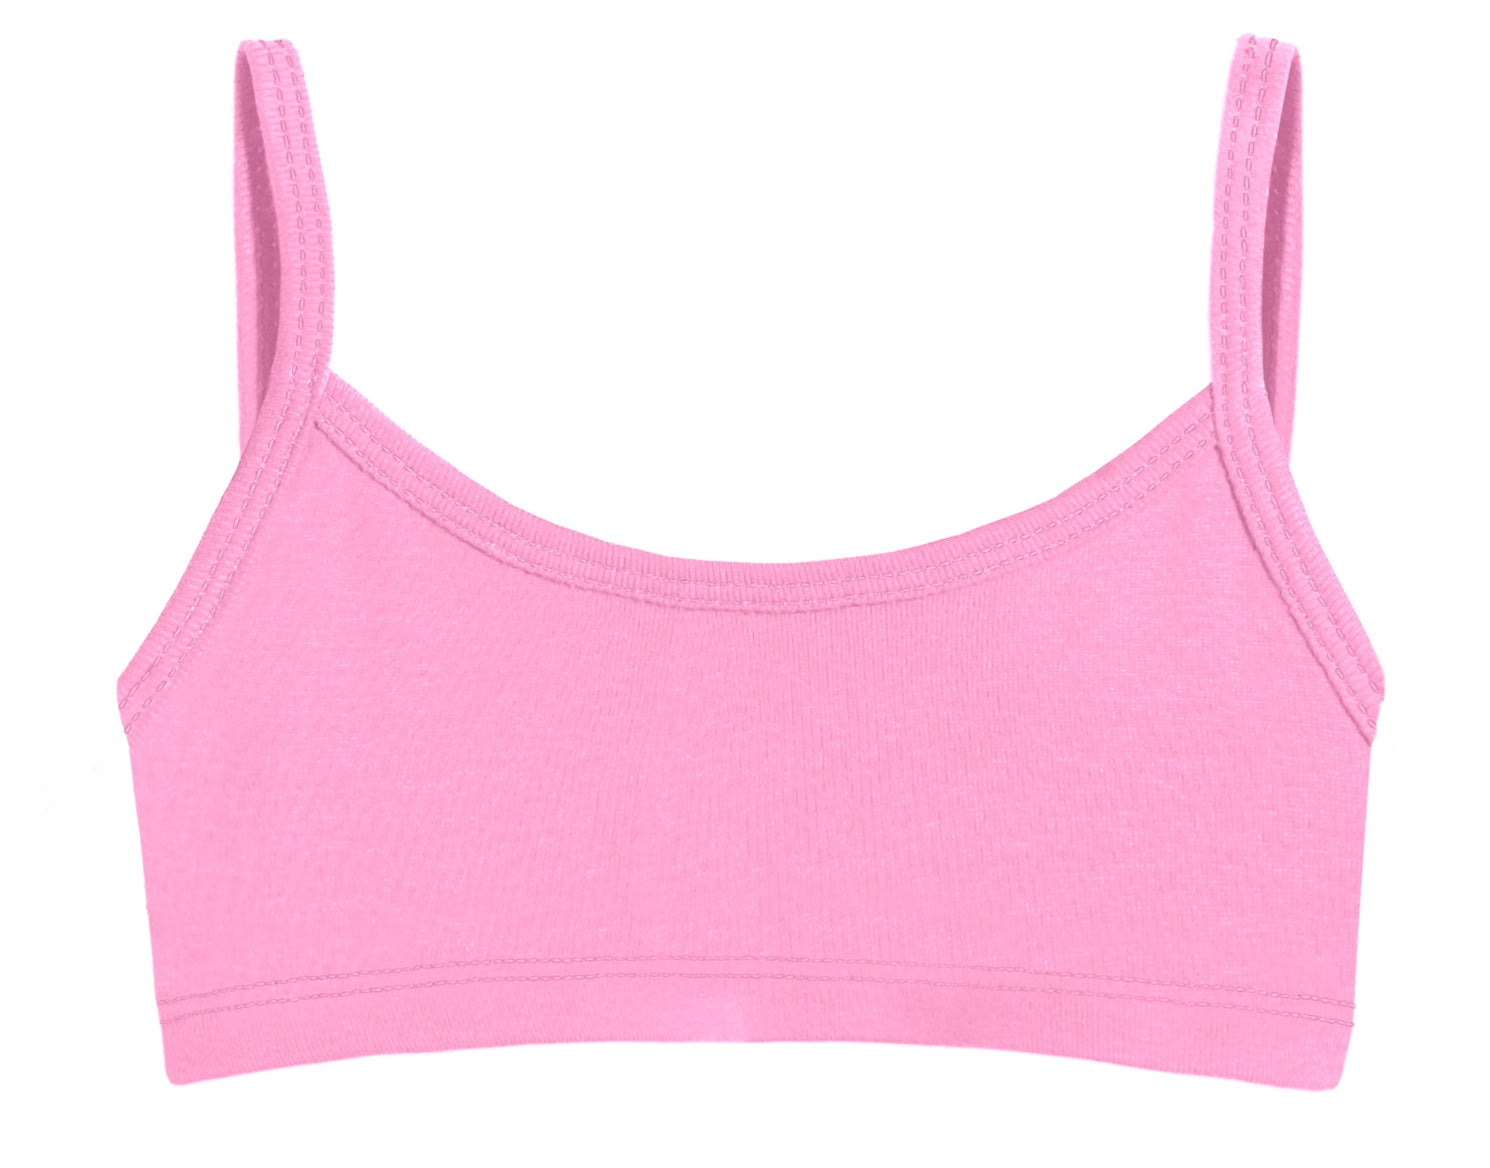 Pink bra for women